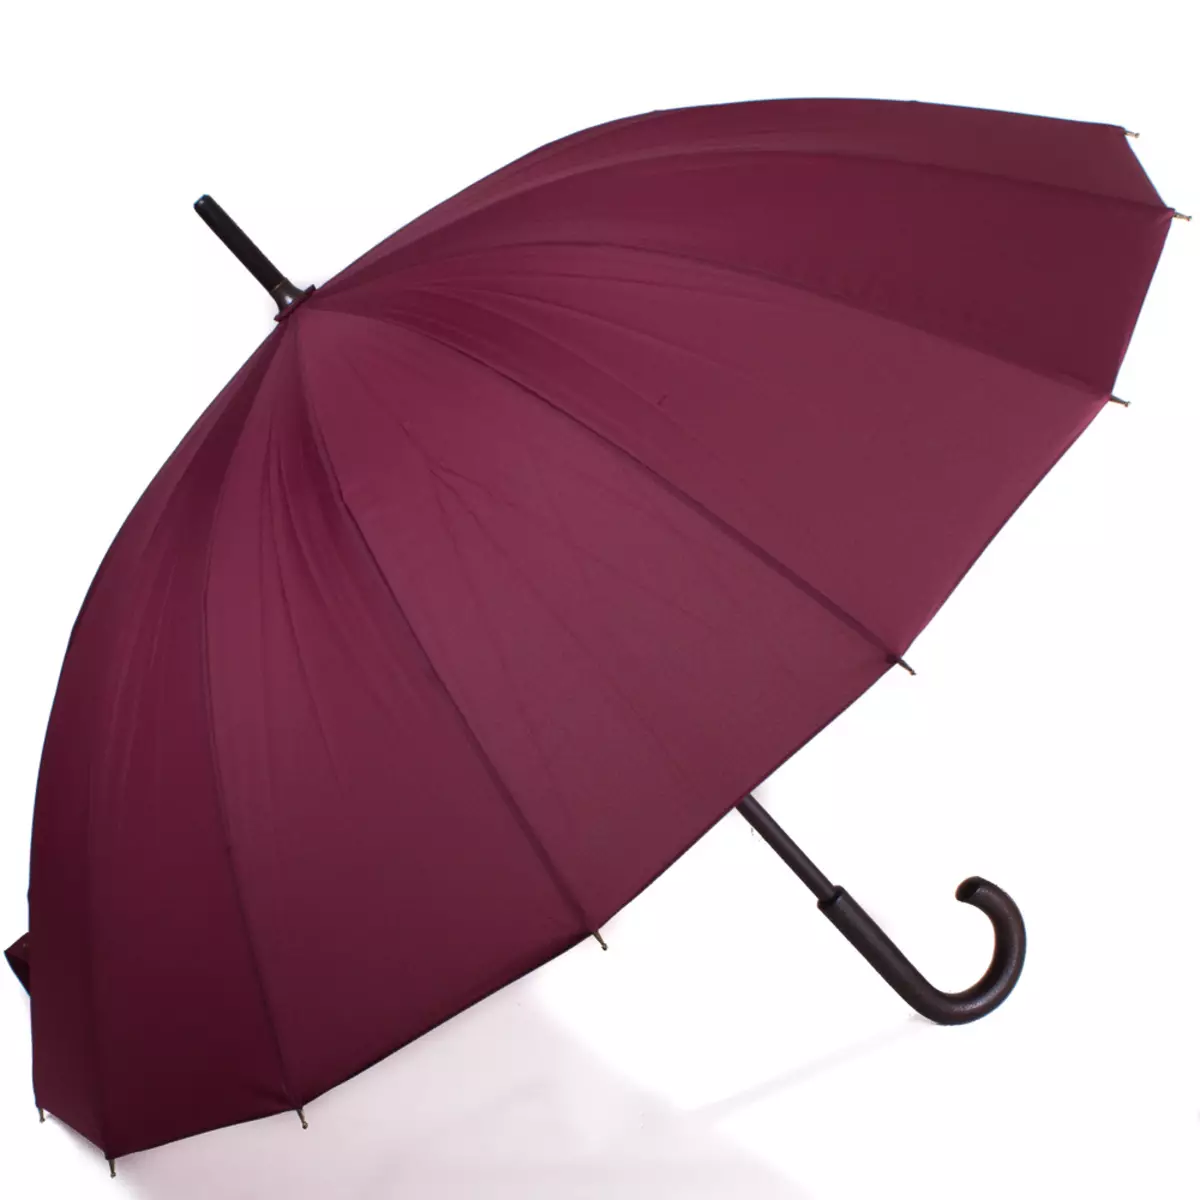 Doppler Umbrellas (60 ফটো): মহিলা মডেল বেত এবং ভাঁজ, doppler রিভিউ 15227_16